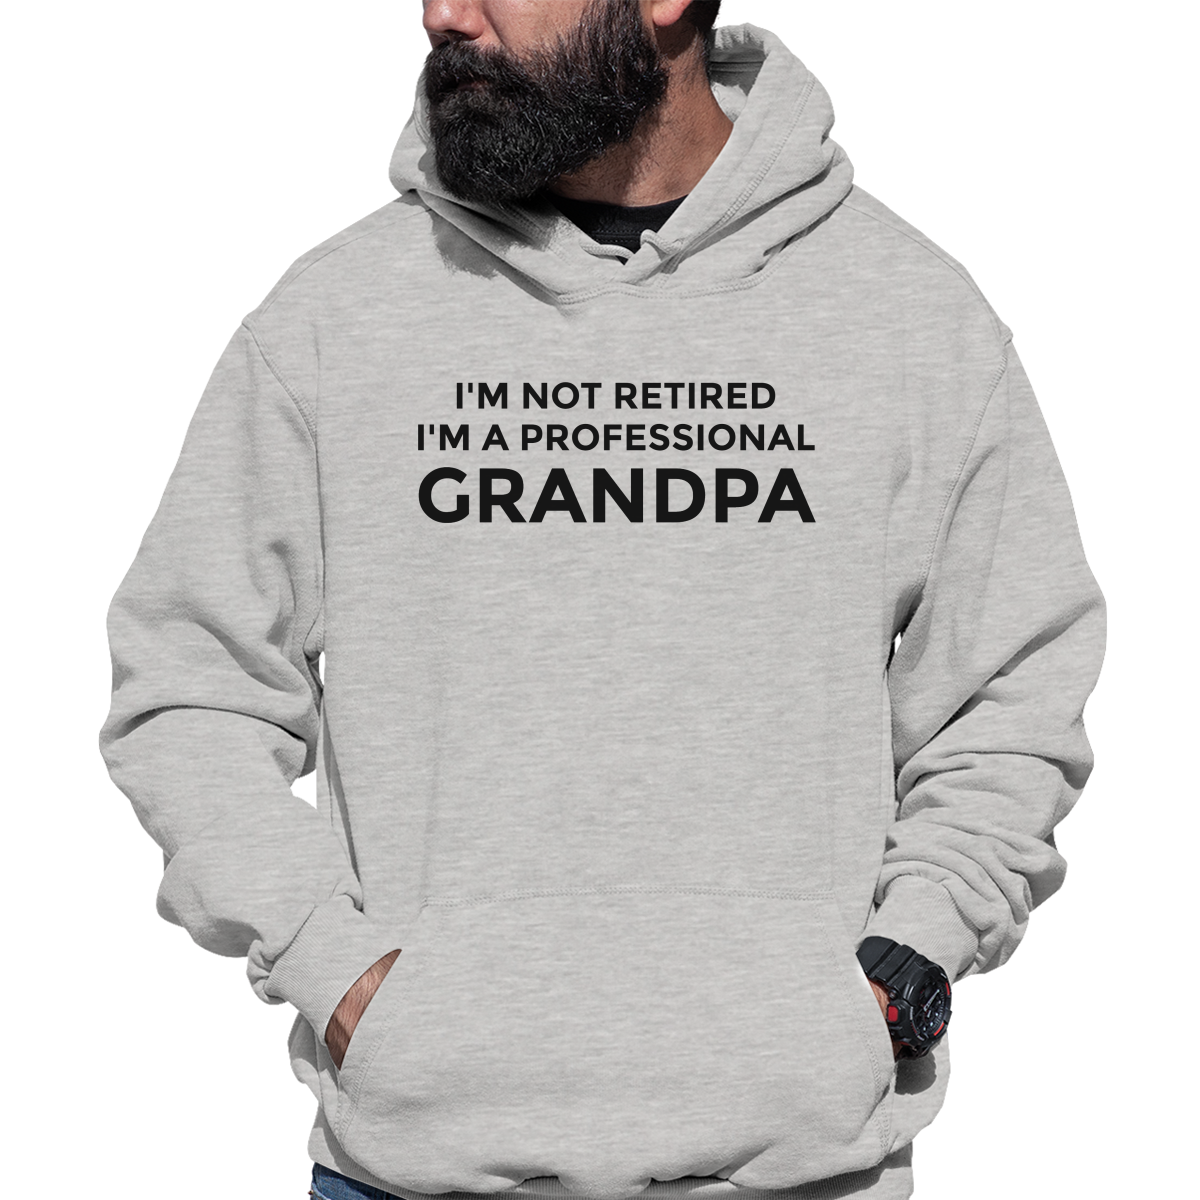 I'm Not Retired I'm a Professional Grandpa Unisex Hoodie | Gray